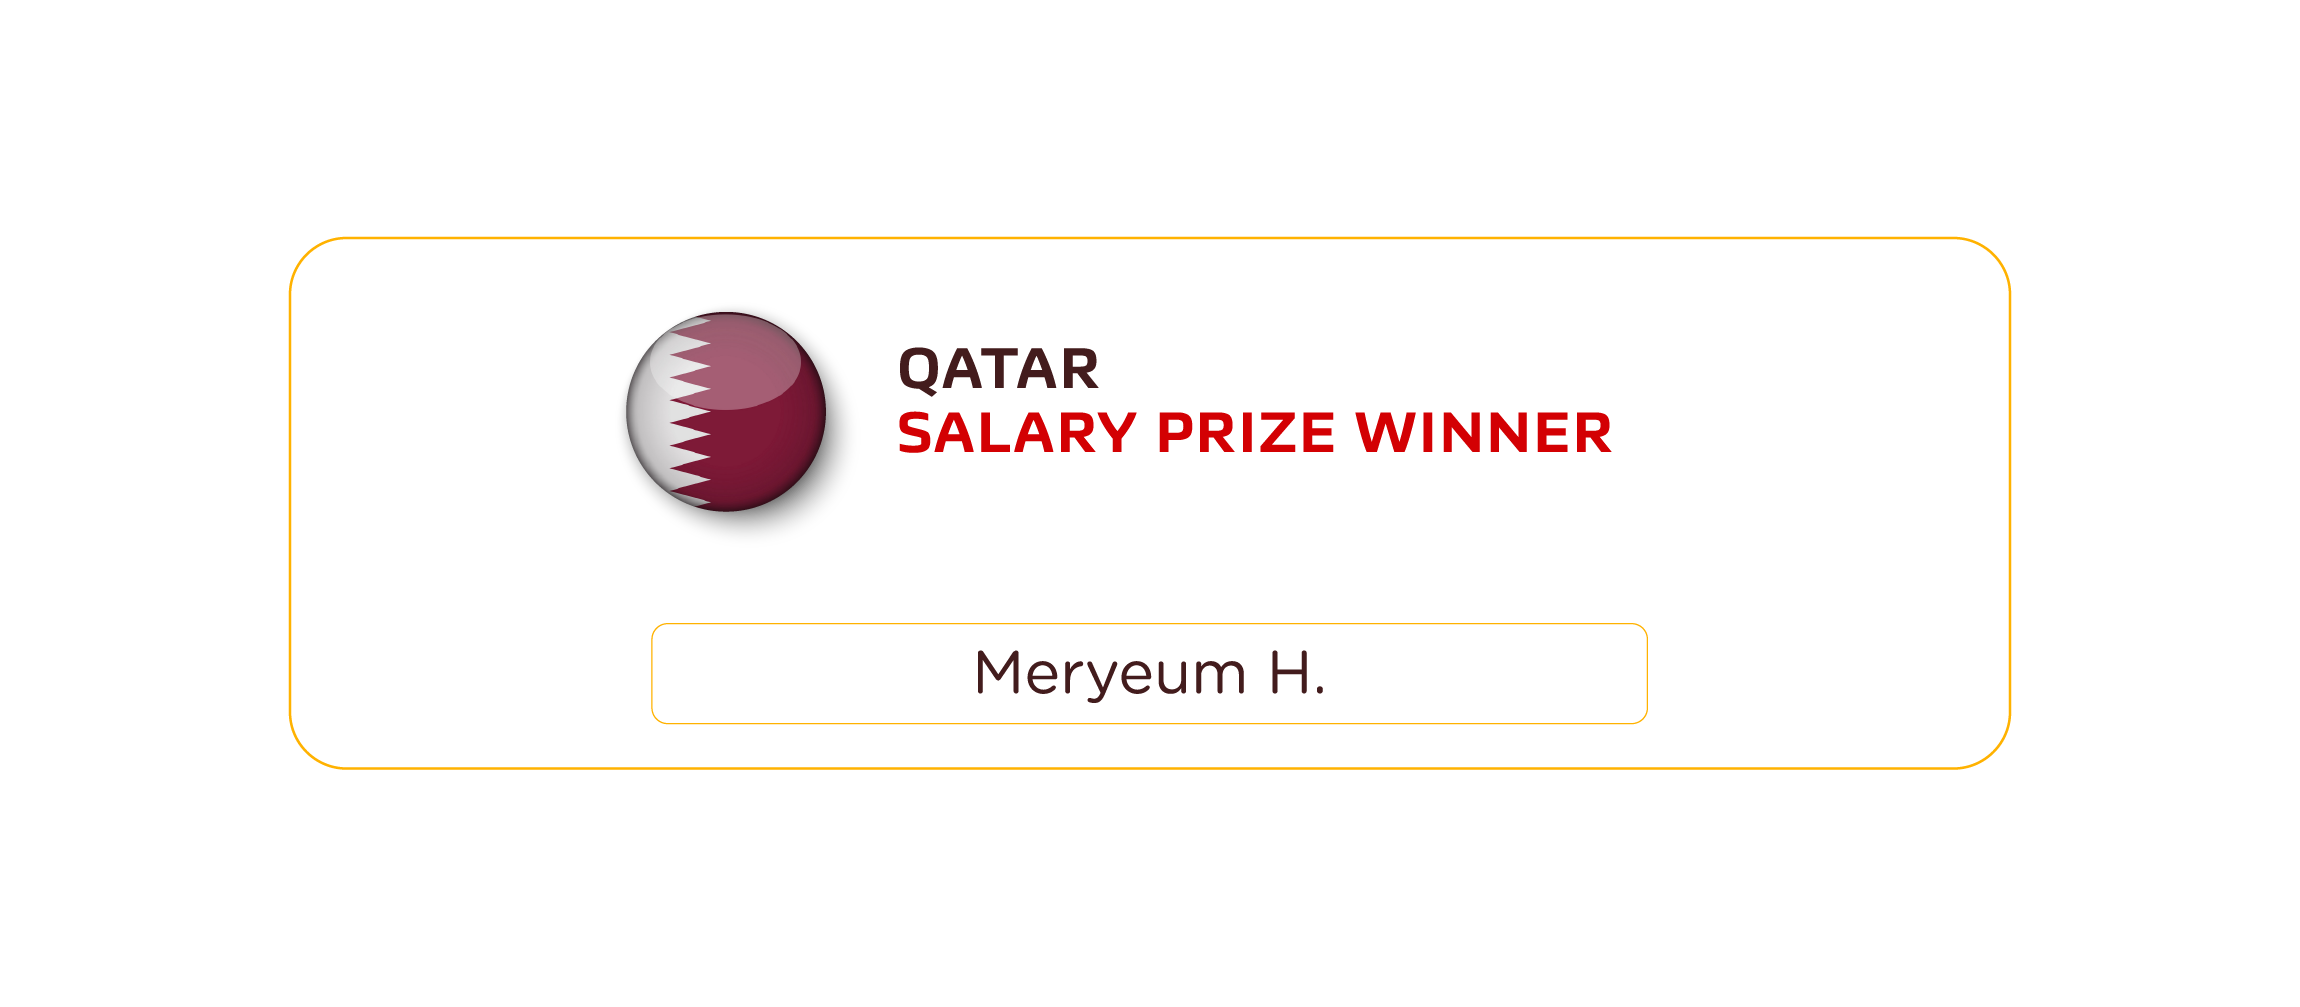 Nescafe Win A Salary - Grand Prizes - November - Qatar